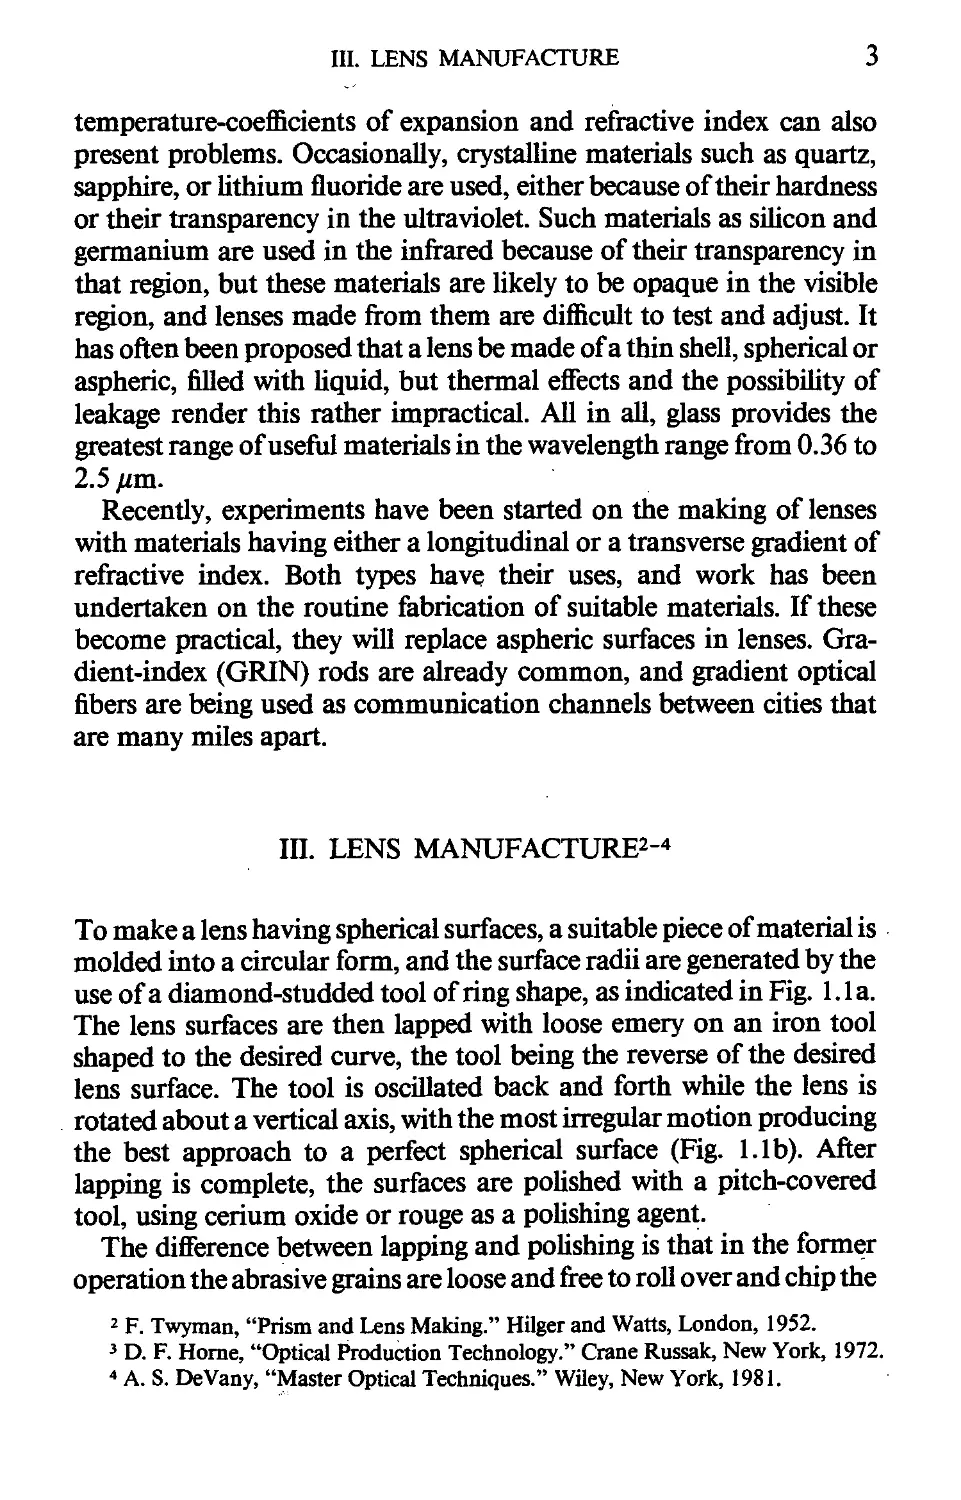 III. Lens Manufacture